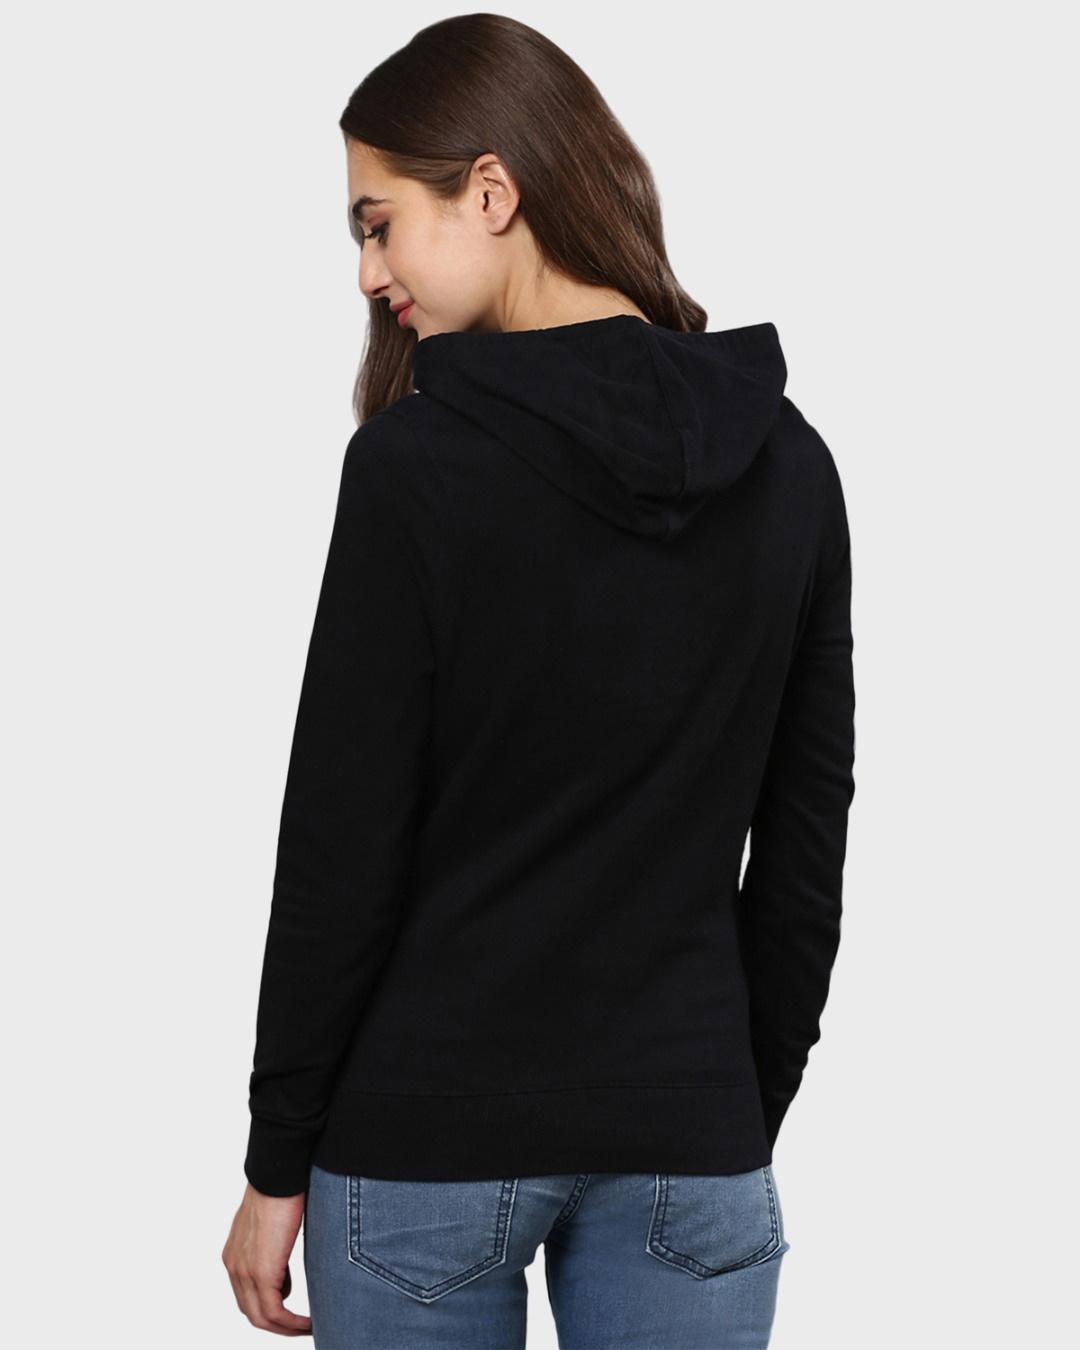 Shop Women's Black Printed Stylish Casual Hooded Sweatshirt-Back